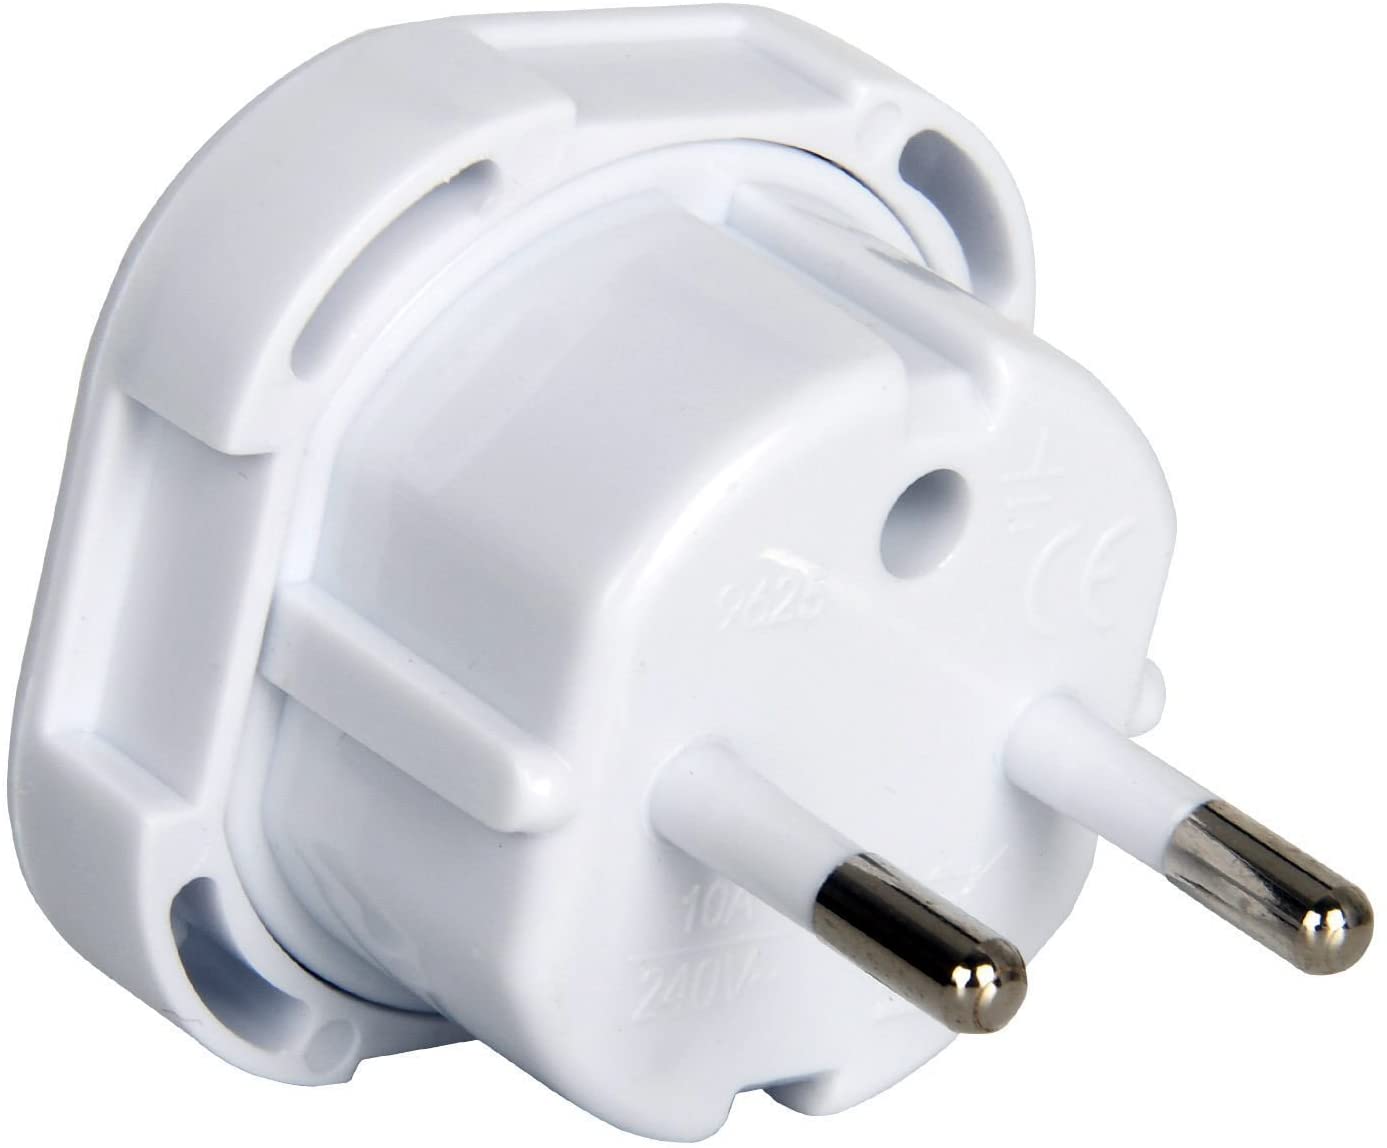 Travel Adapter Pack of 5 UK to EU Euro European adapter White Plug 2 Pin 